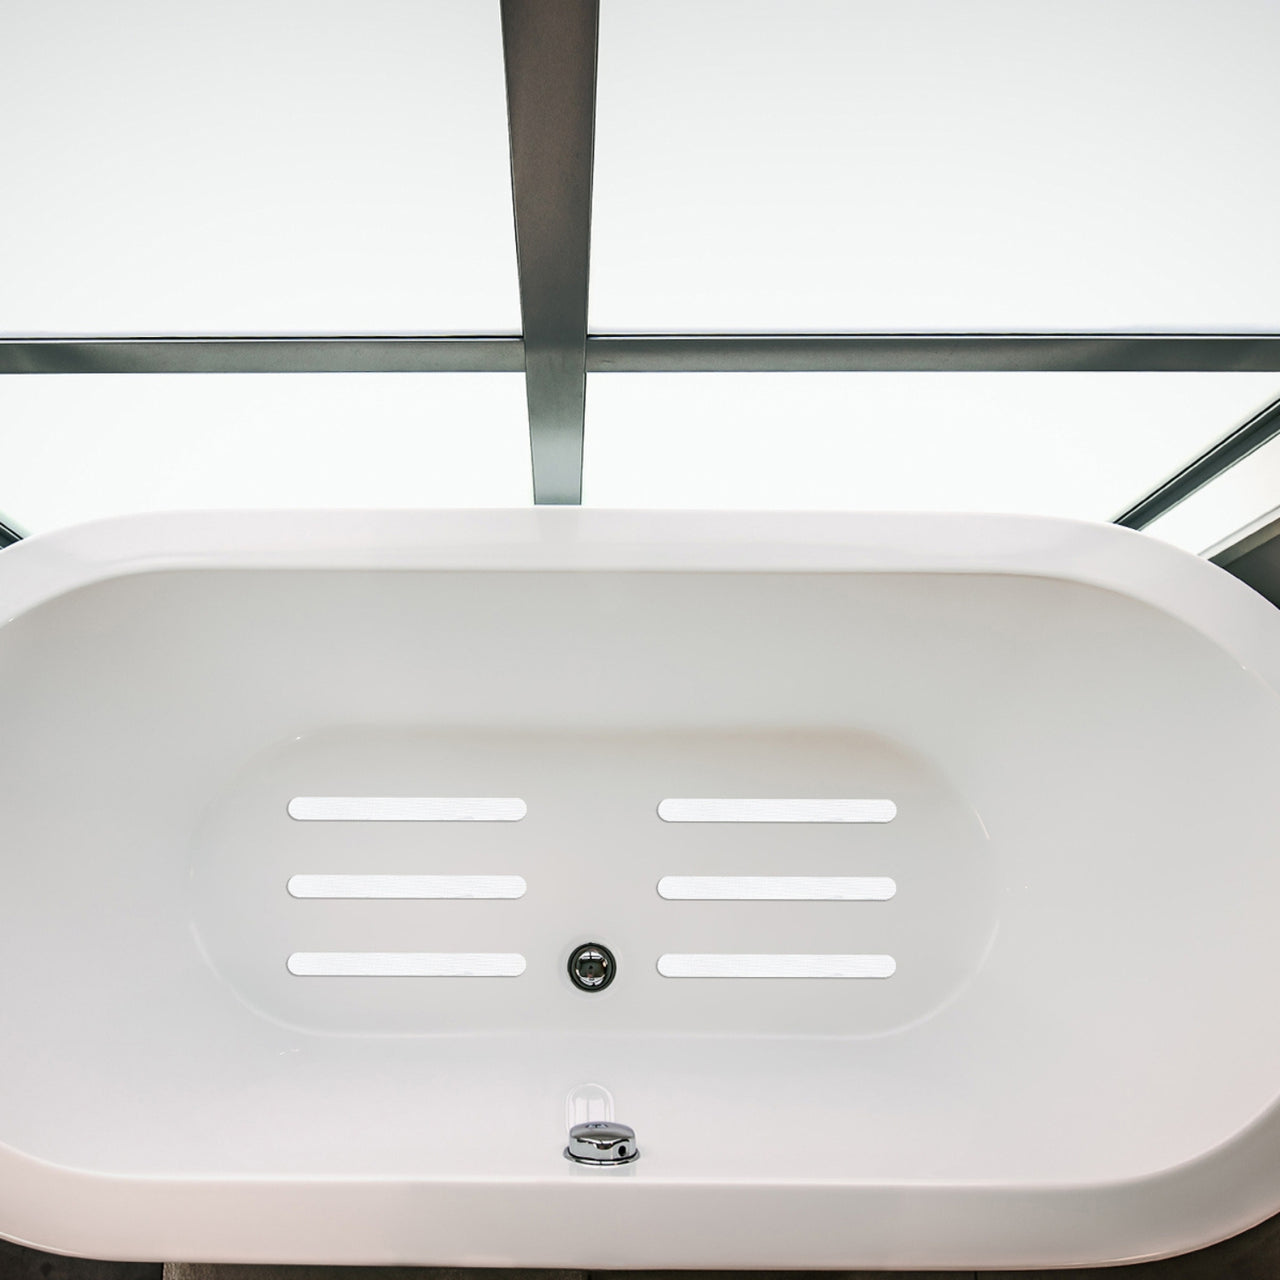 White anti slip grip in bath tub